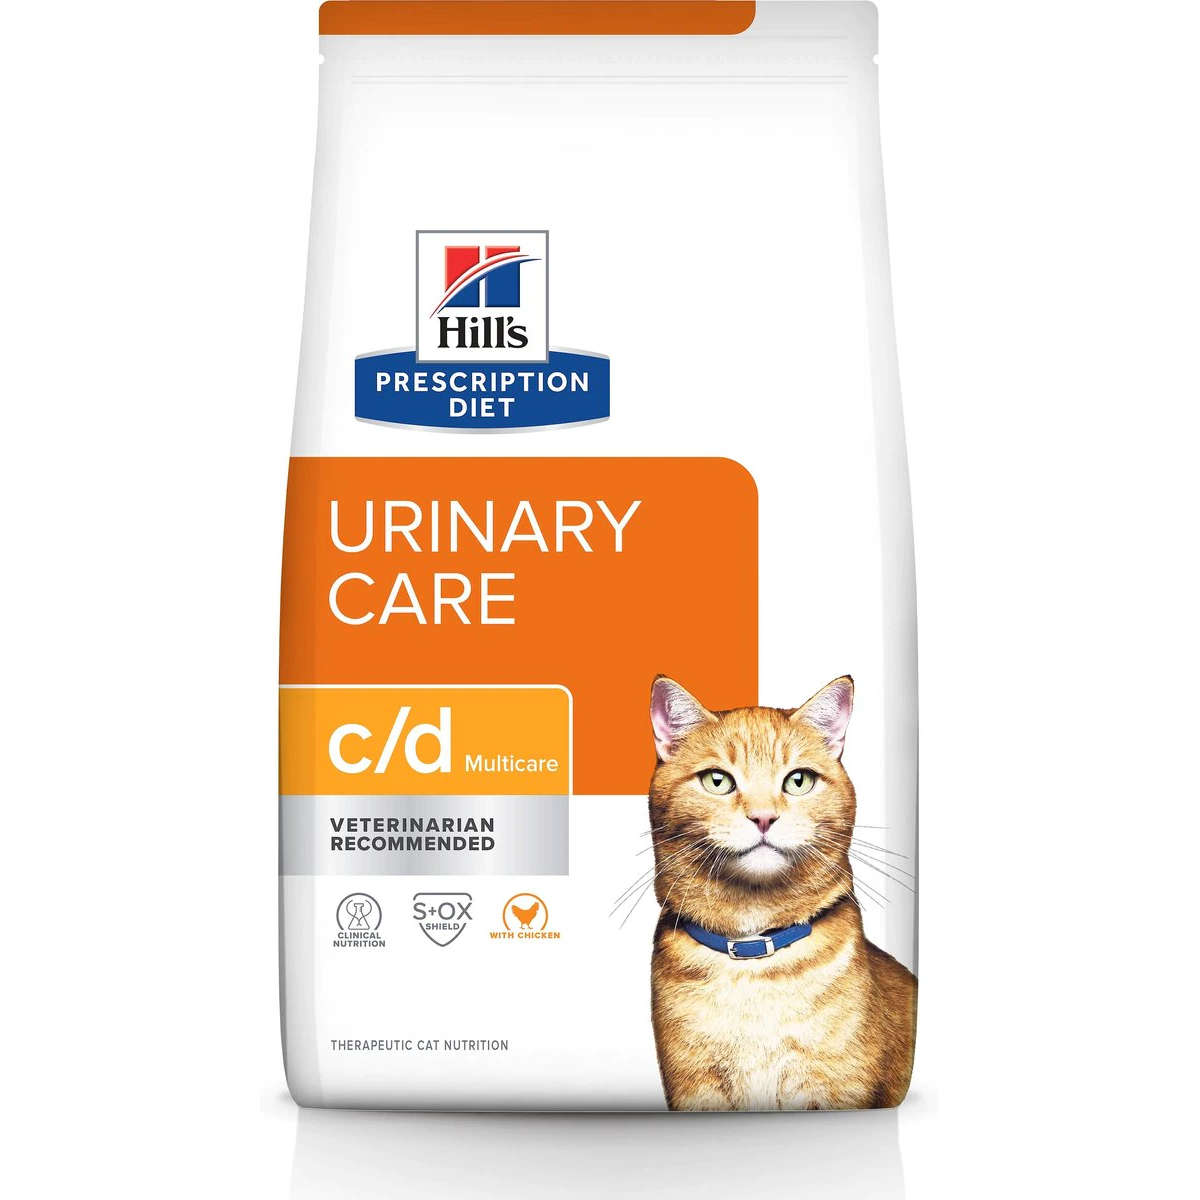 Hill's Prescription Diet Urinary Care Dry Cat Food